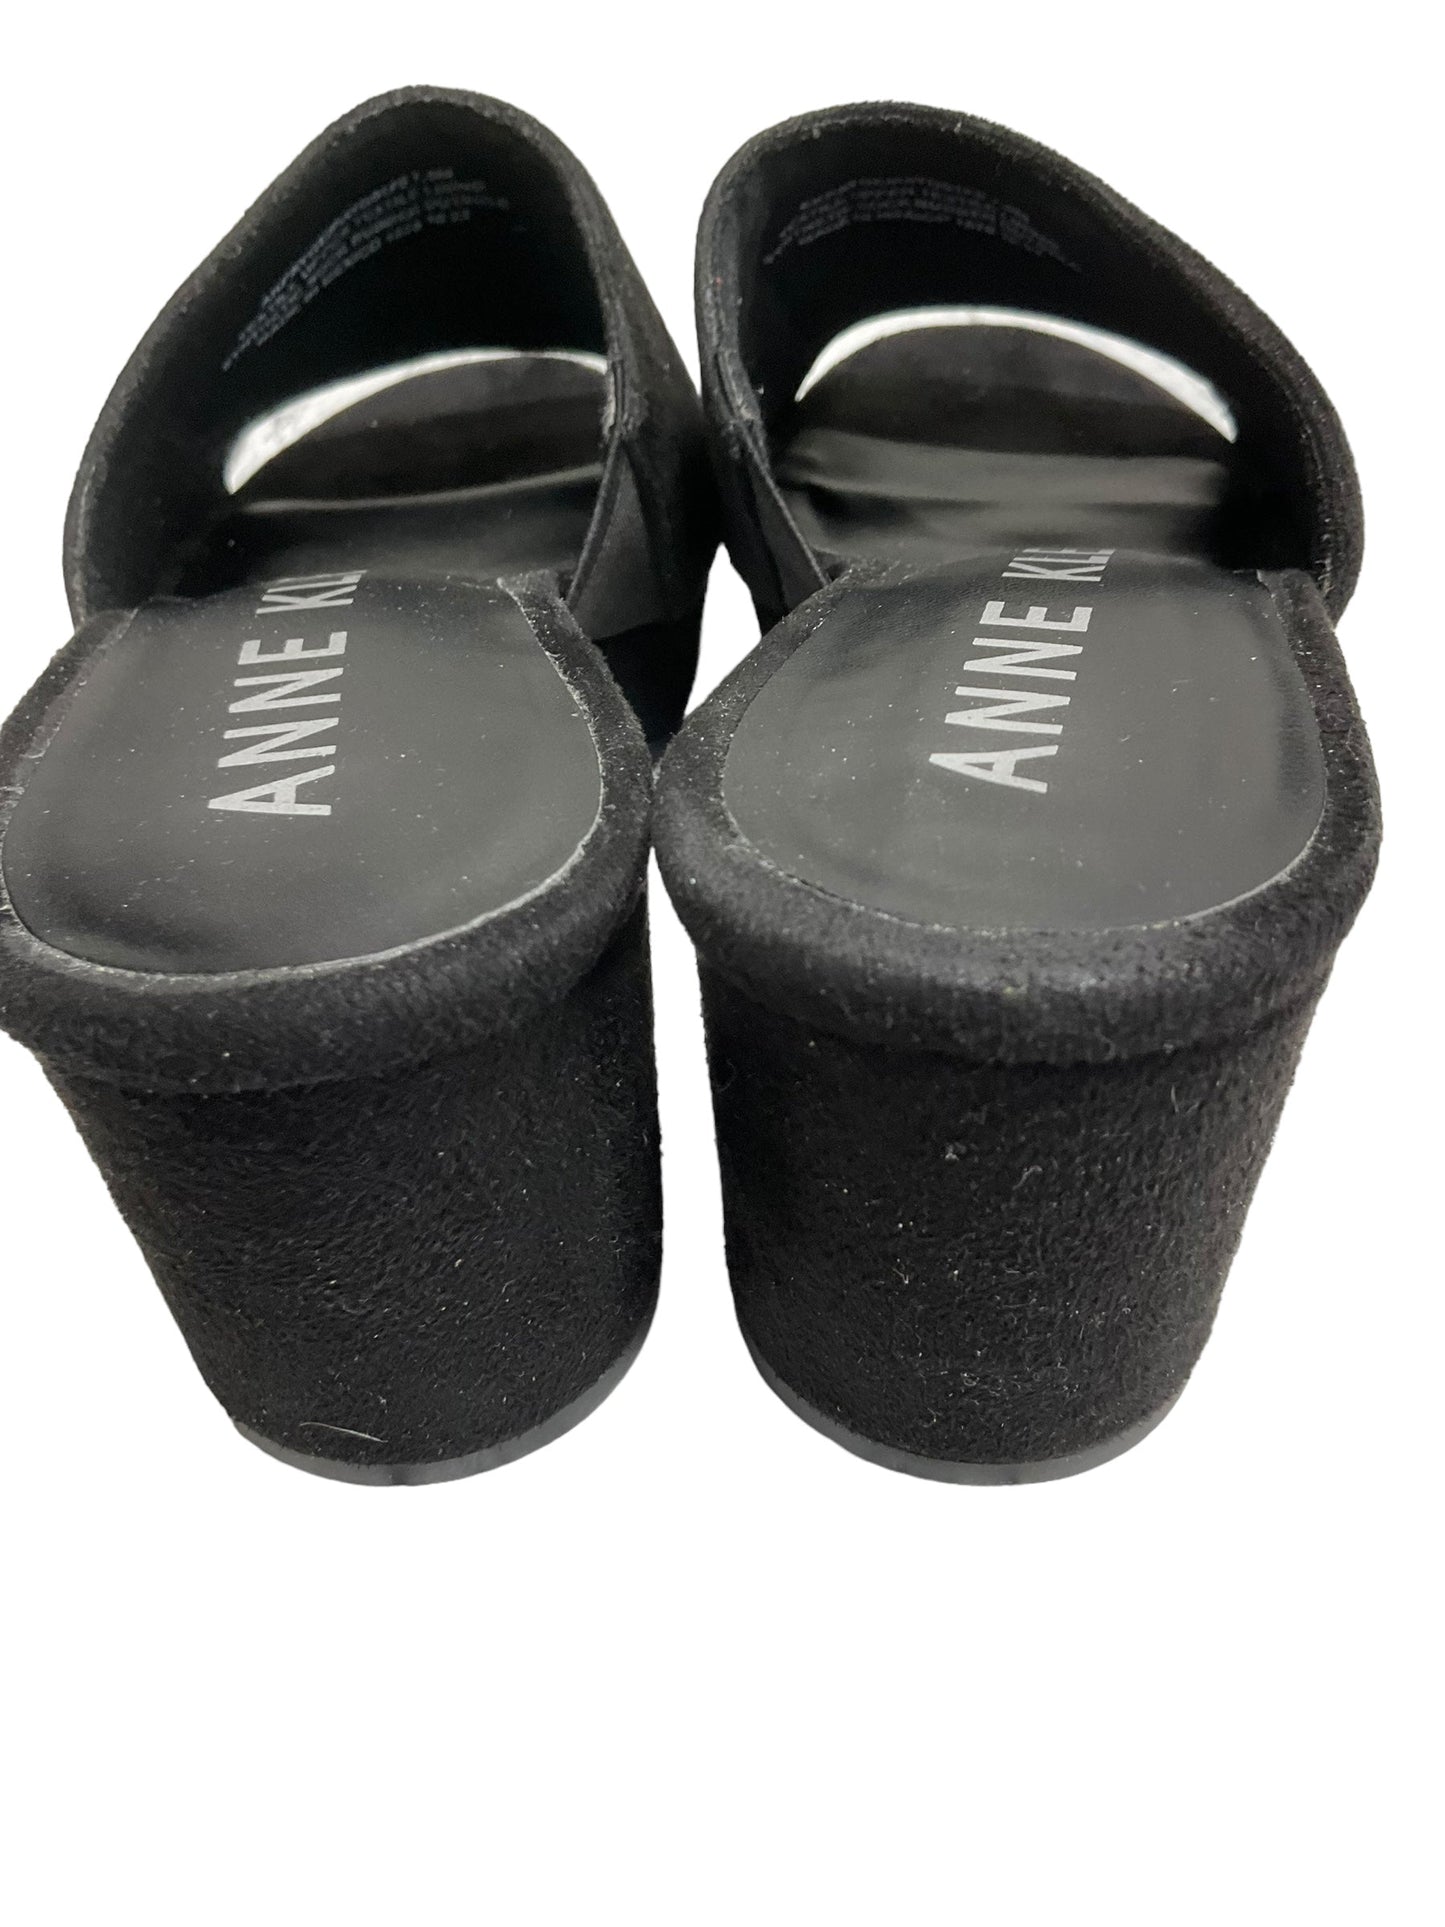 Black Shoes Heels Block Anne Klein, Size 7.5